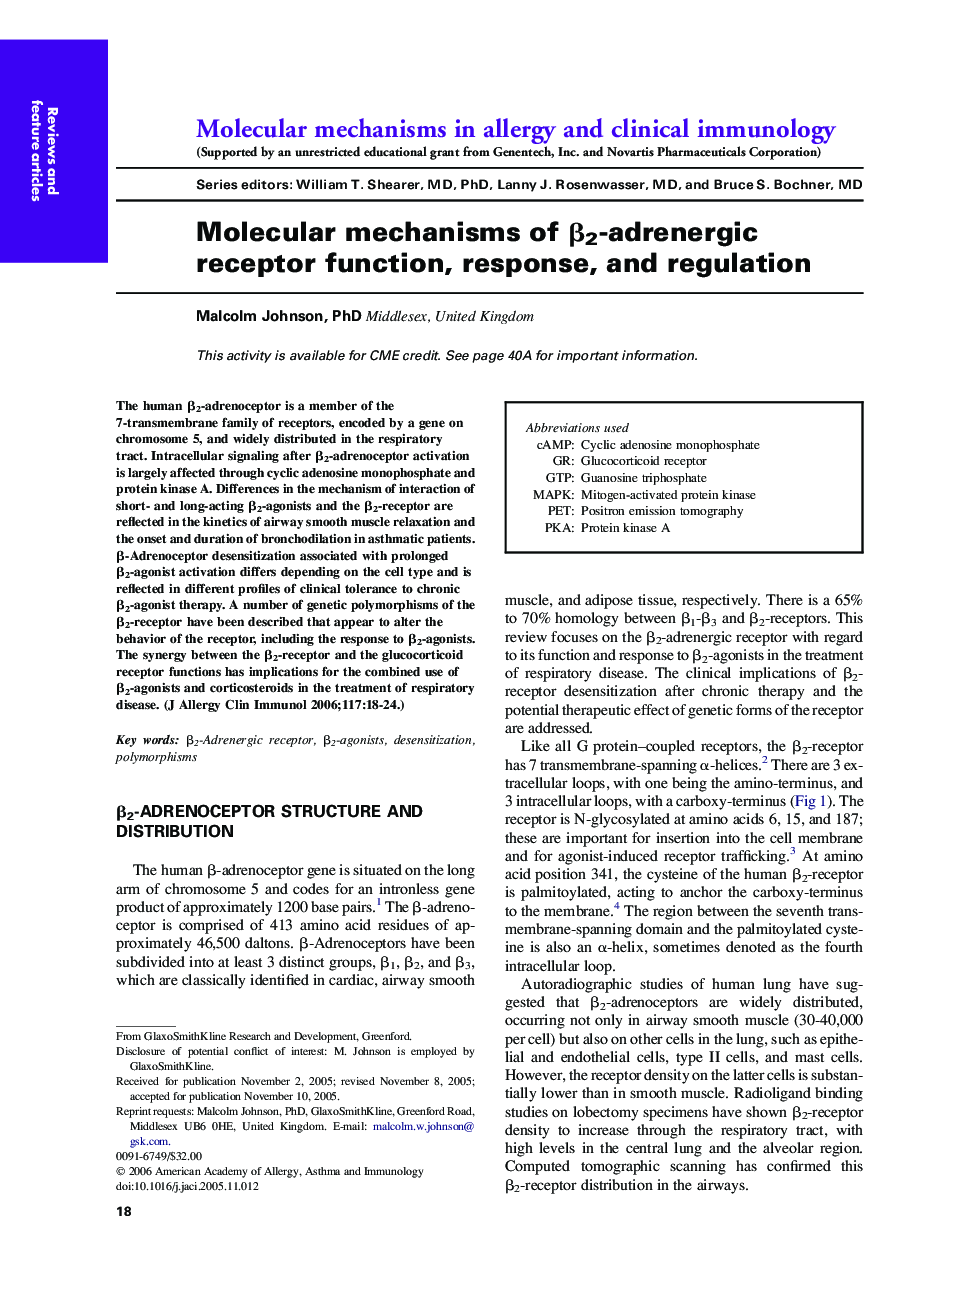 Molecular mechanisms of β2-adrenergic receptor function, response, and regulation 